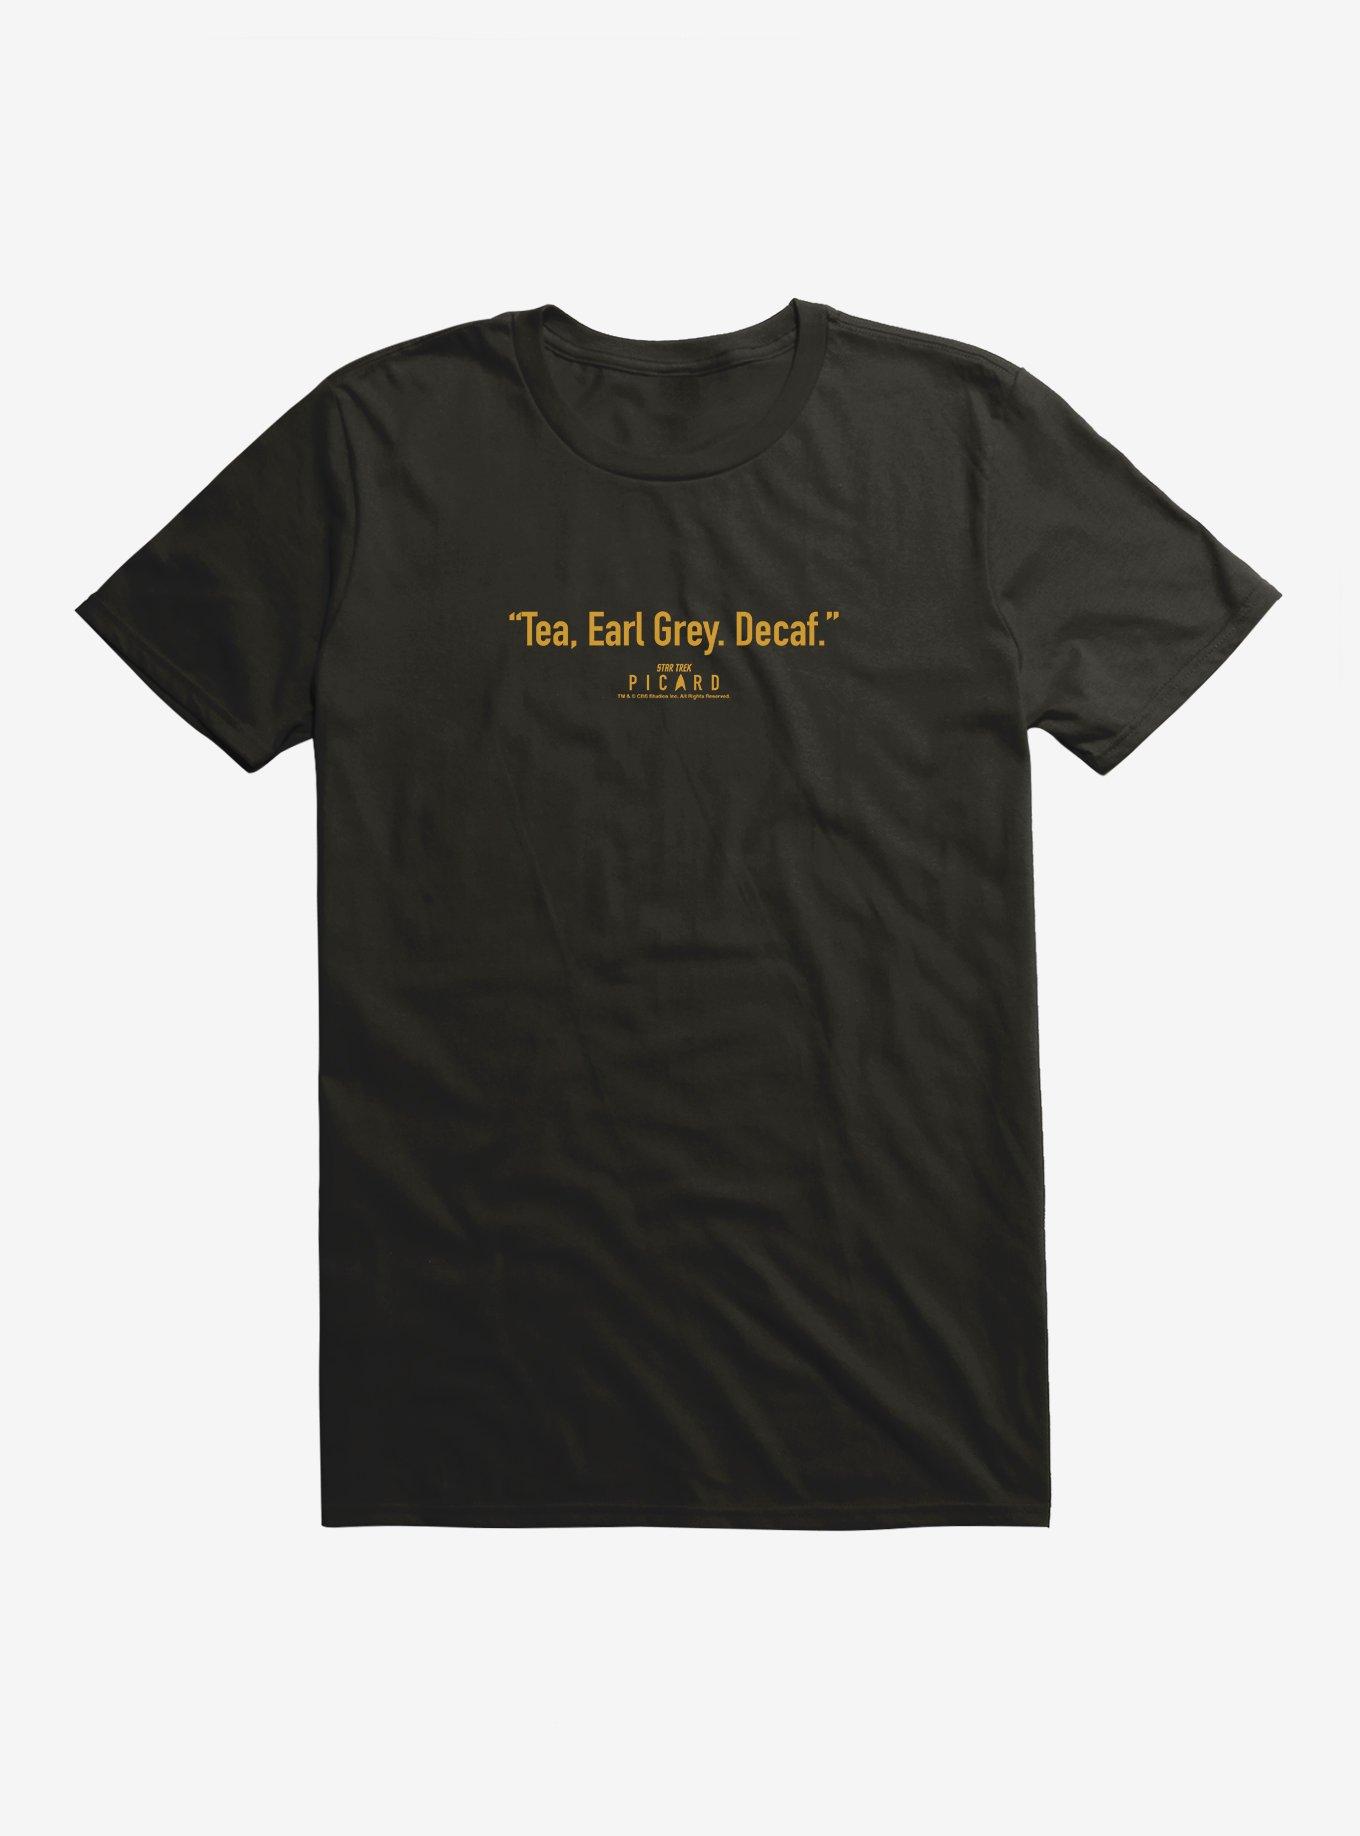 Star Trek Picard Tea Earl Grey T-Shirt | BoxLunch